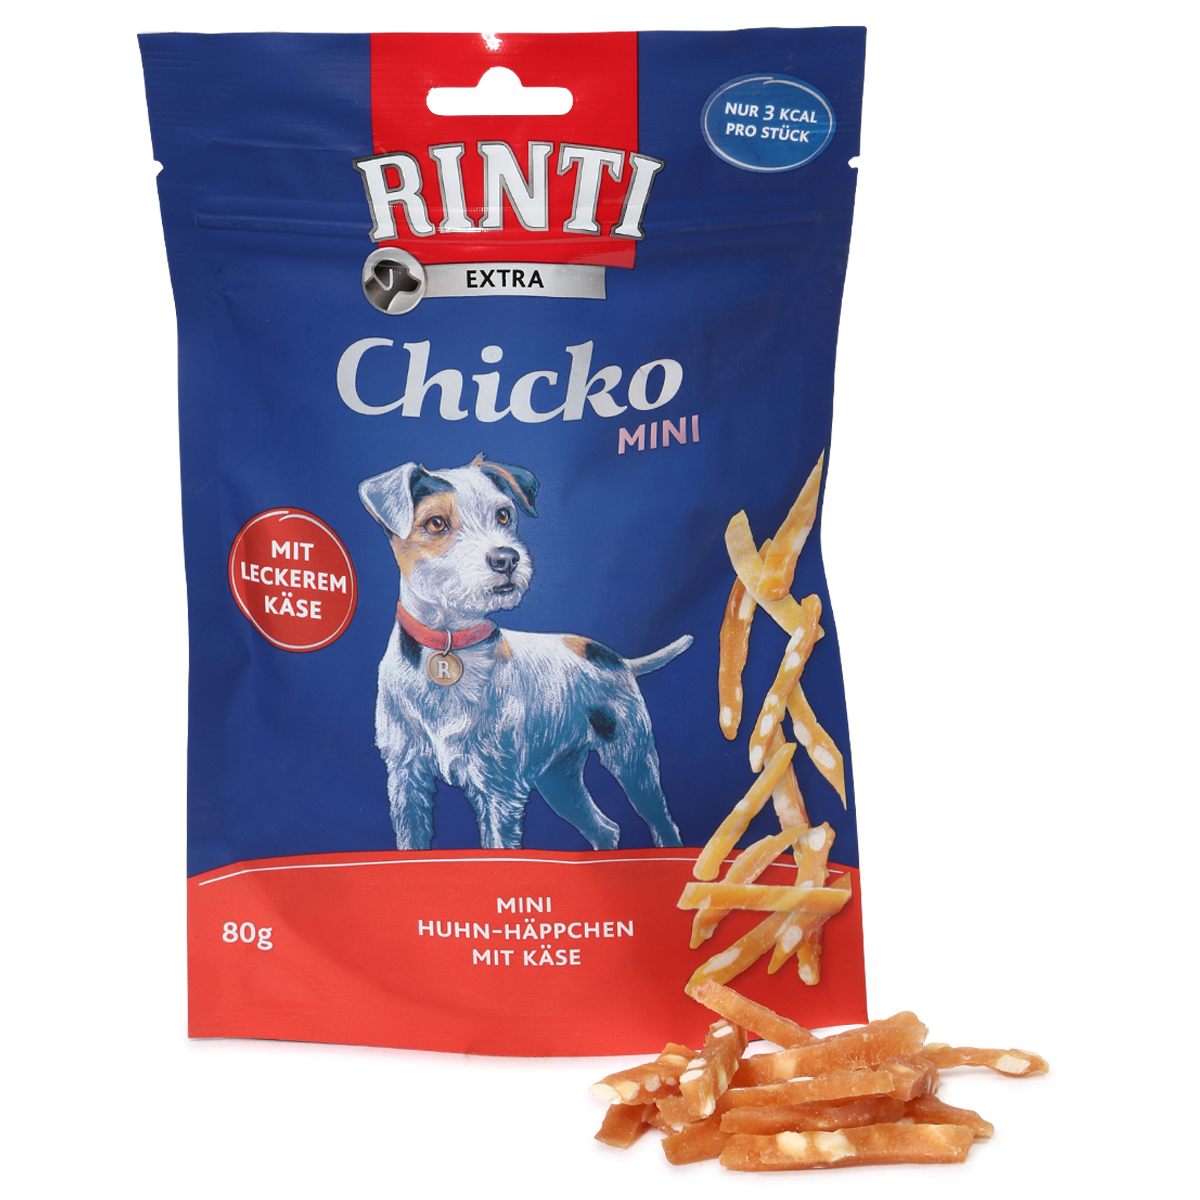 Rinti Extra Chicko Mini Huhn-Häppchen mit Käse 6x80g